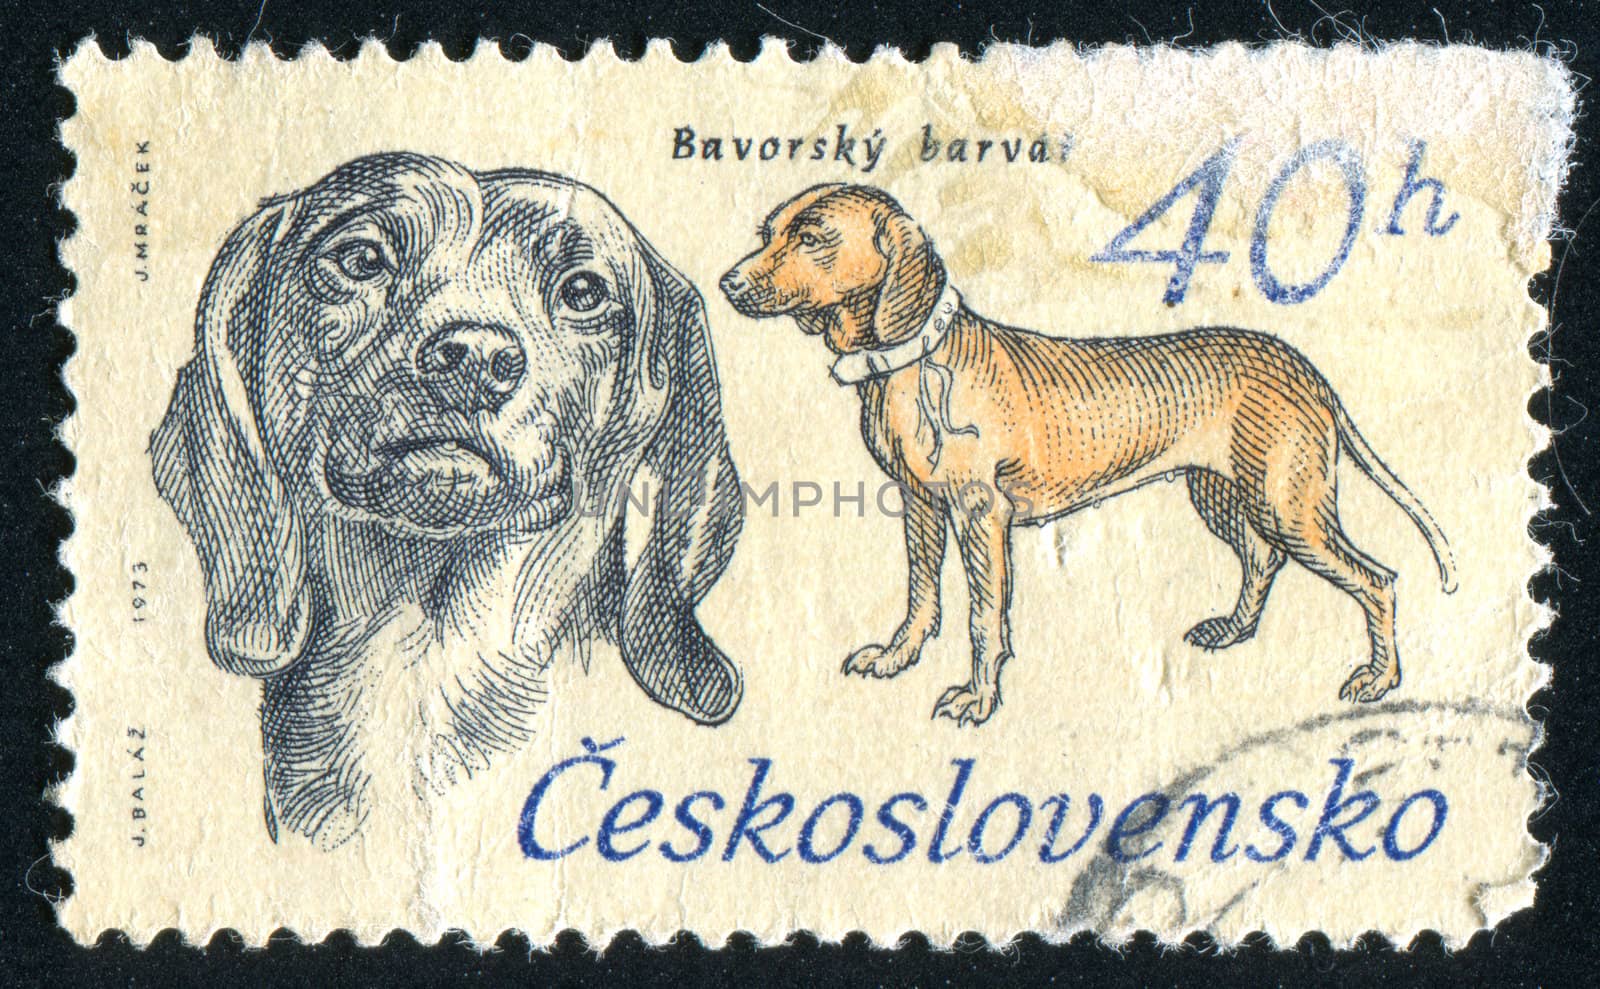 CZECHOSLOVAKIA - CIRCA 1973: stamp printed by Czechoslovakia, shows Hunting dog, circa 1973